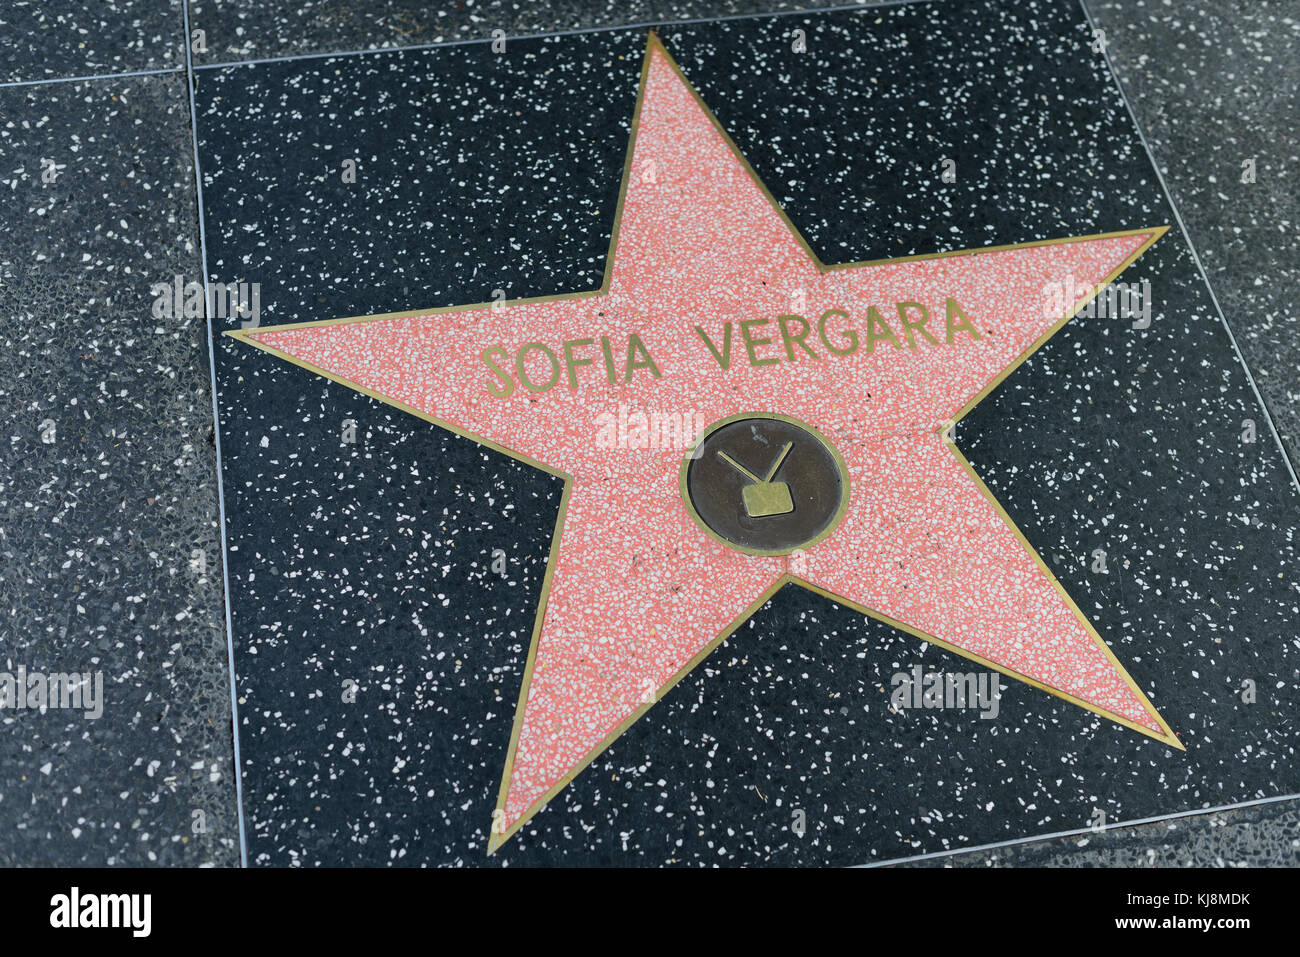 HOLLYWOOD, CA - DEZEMBER 06: Sofia Vergara Star auf dem Hollywood Walk of Fame in Hollywood, Kalifornien am 6. Dezember 2016. Stockfoto